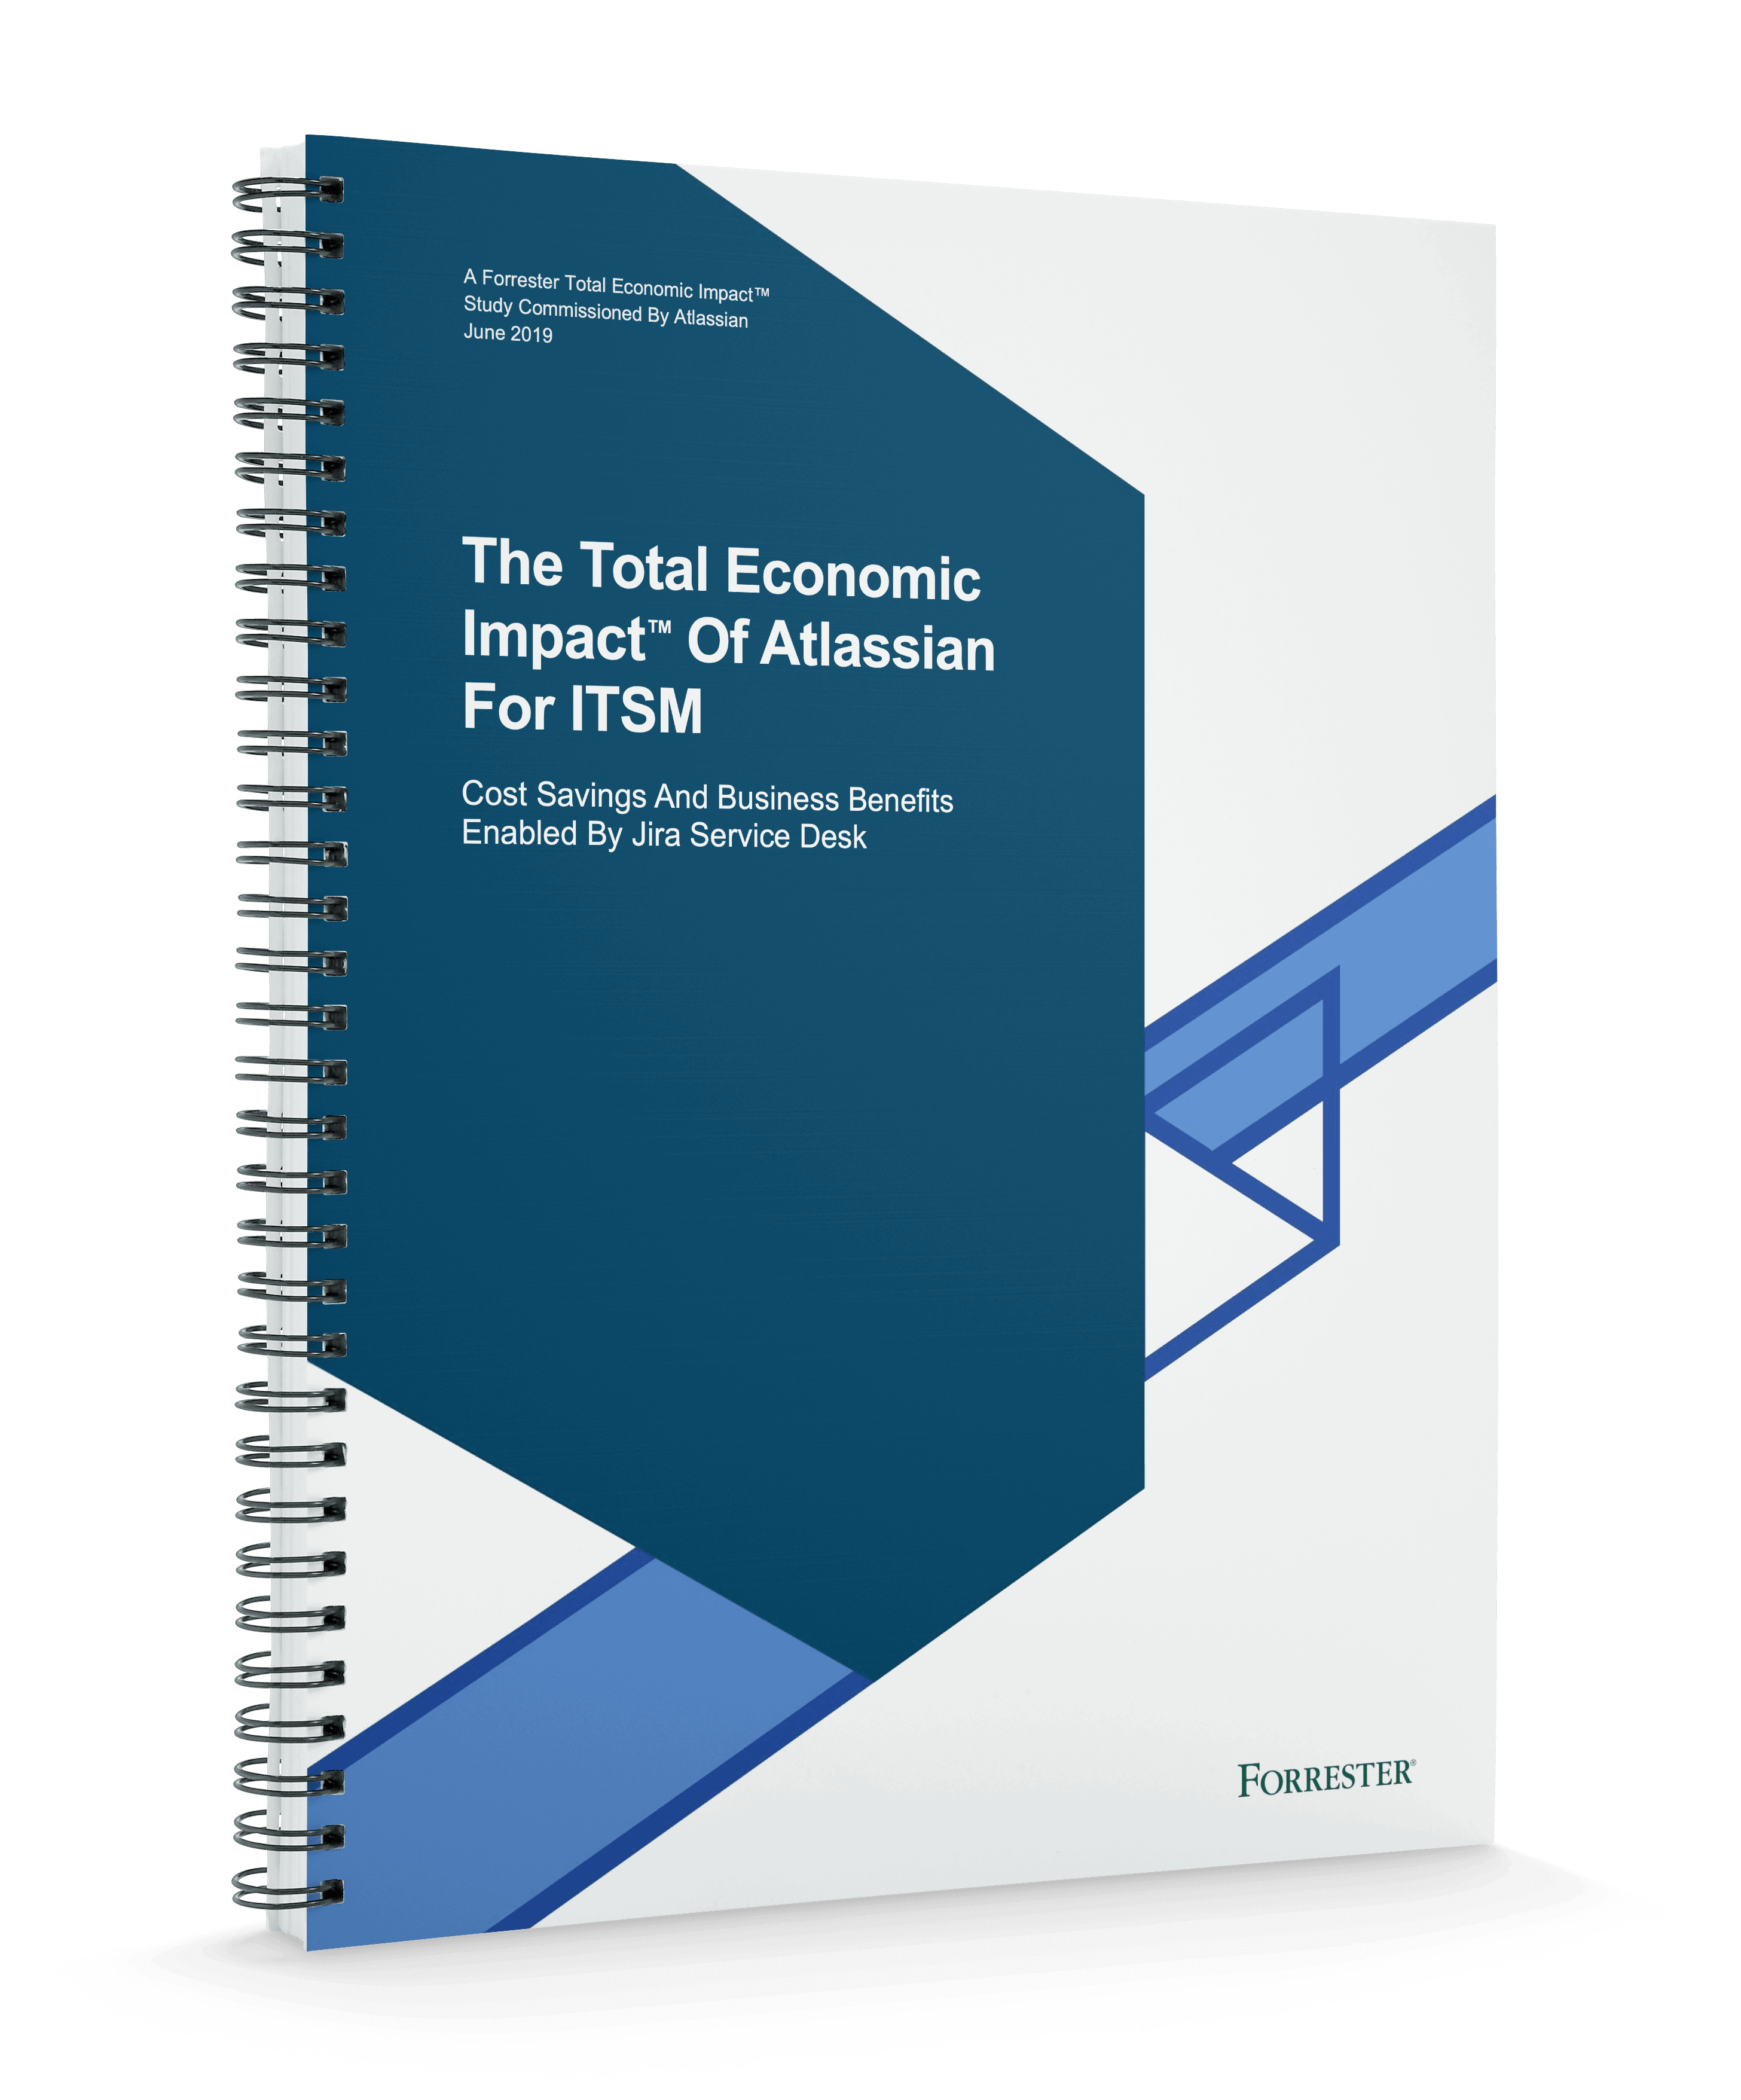 Forrester 计算的 Atlassian for ITSM 的 Total Economic Impact™